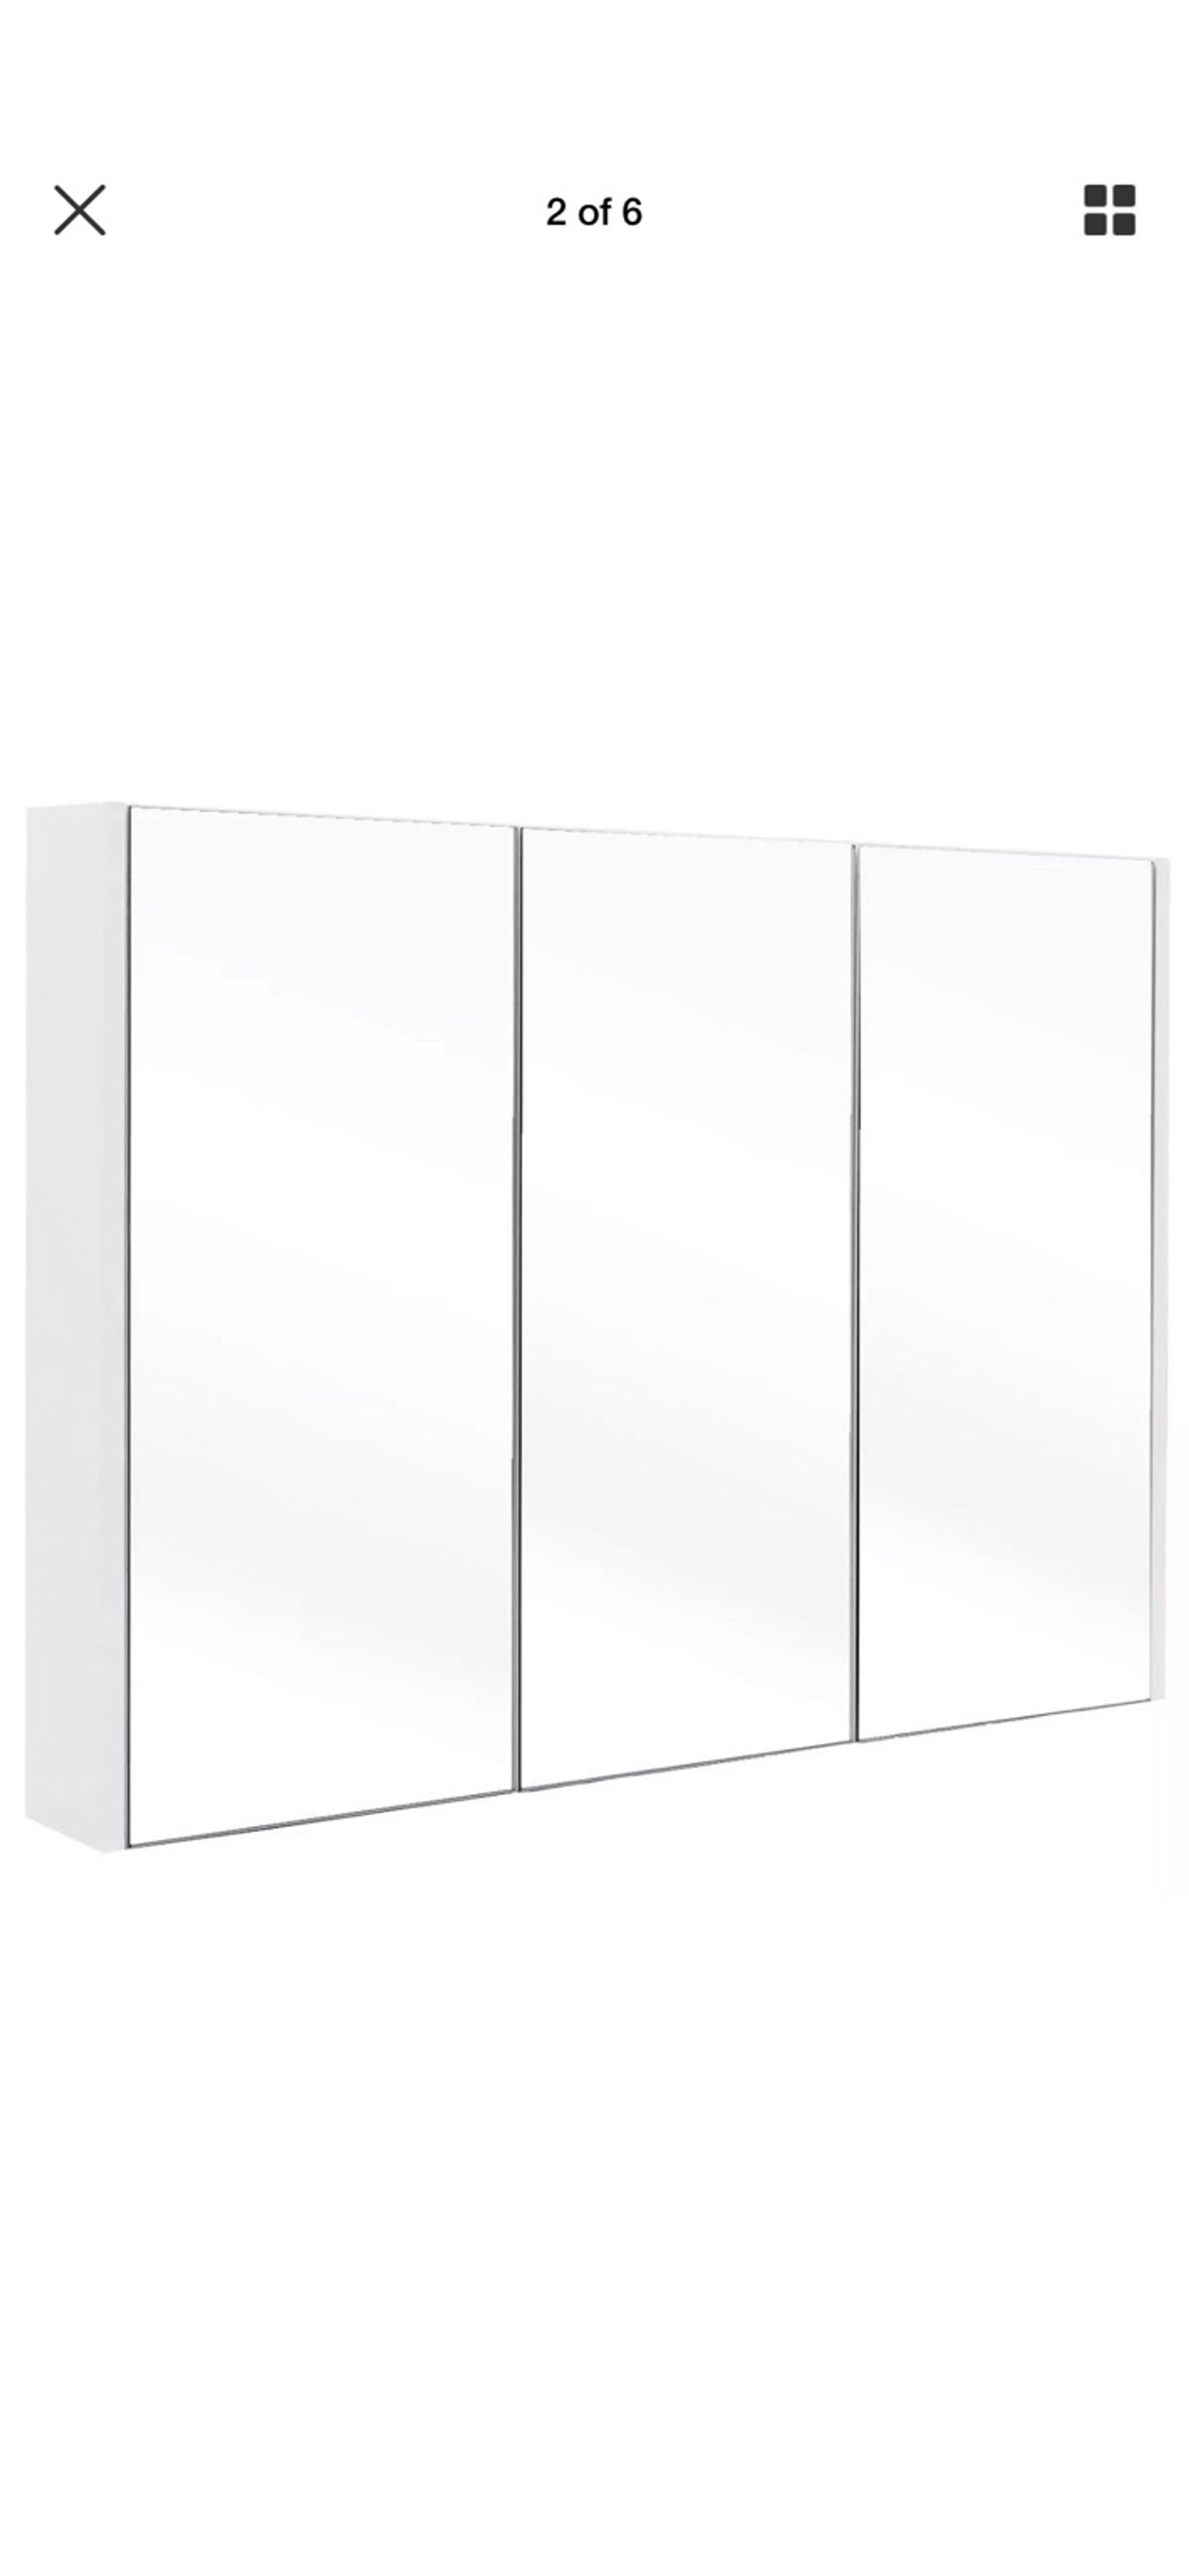 Brand New Bathroom Mirror Cabinet In Wf8 Wakefield Fur 30 00